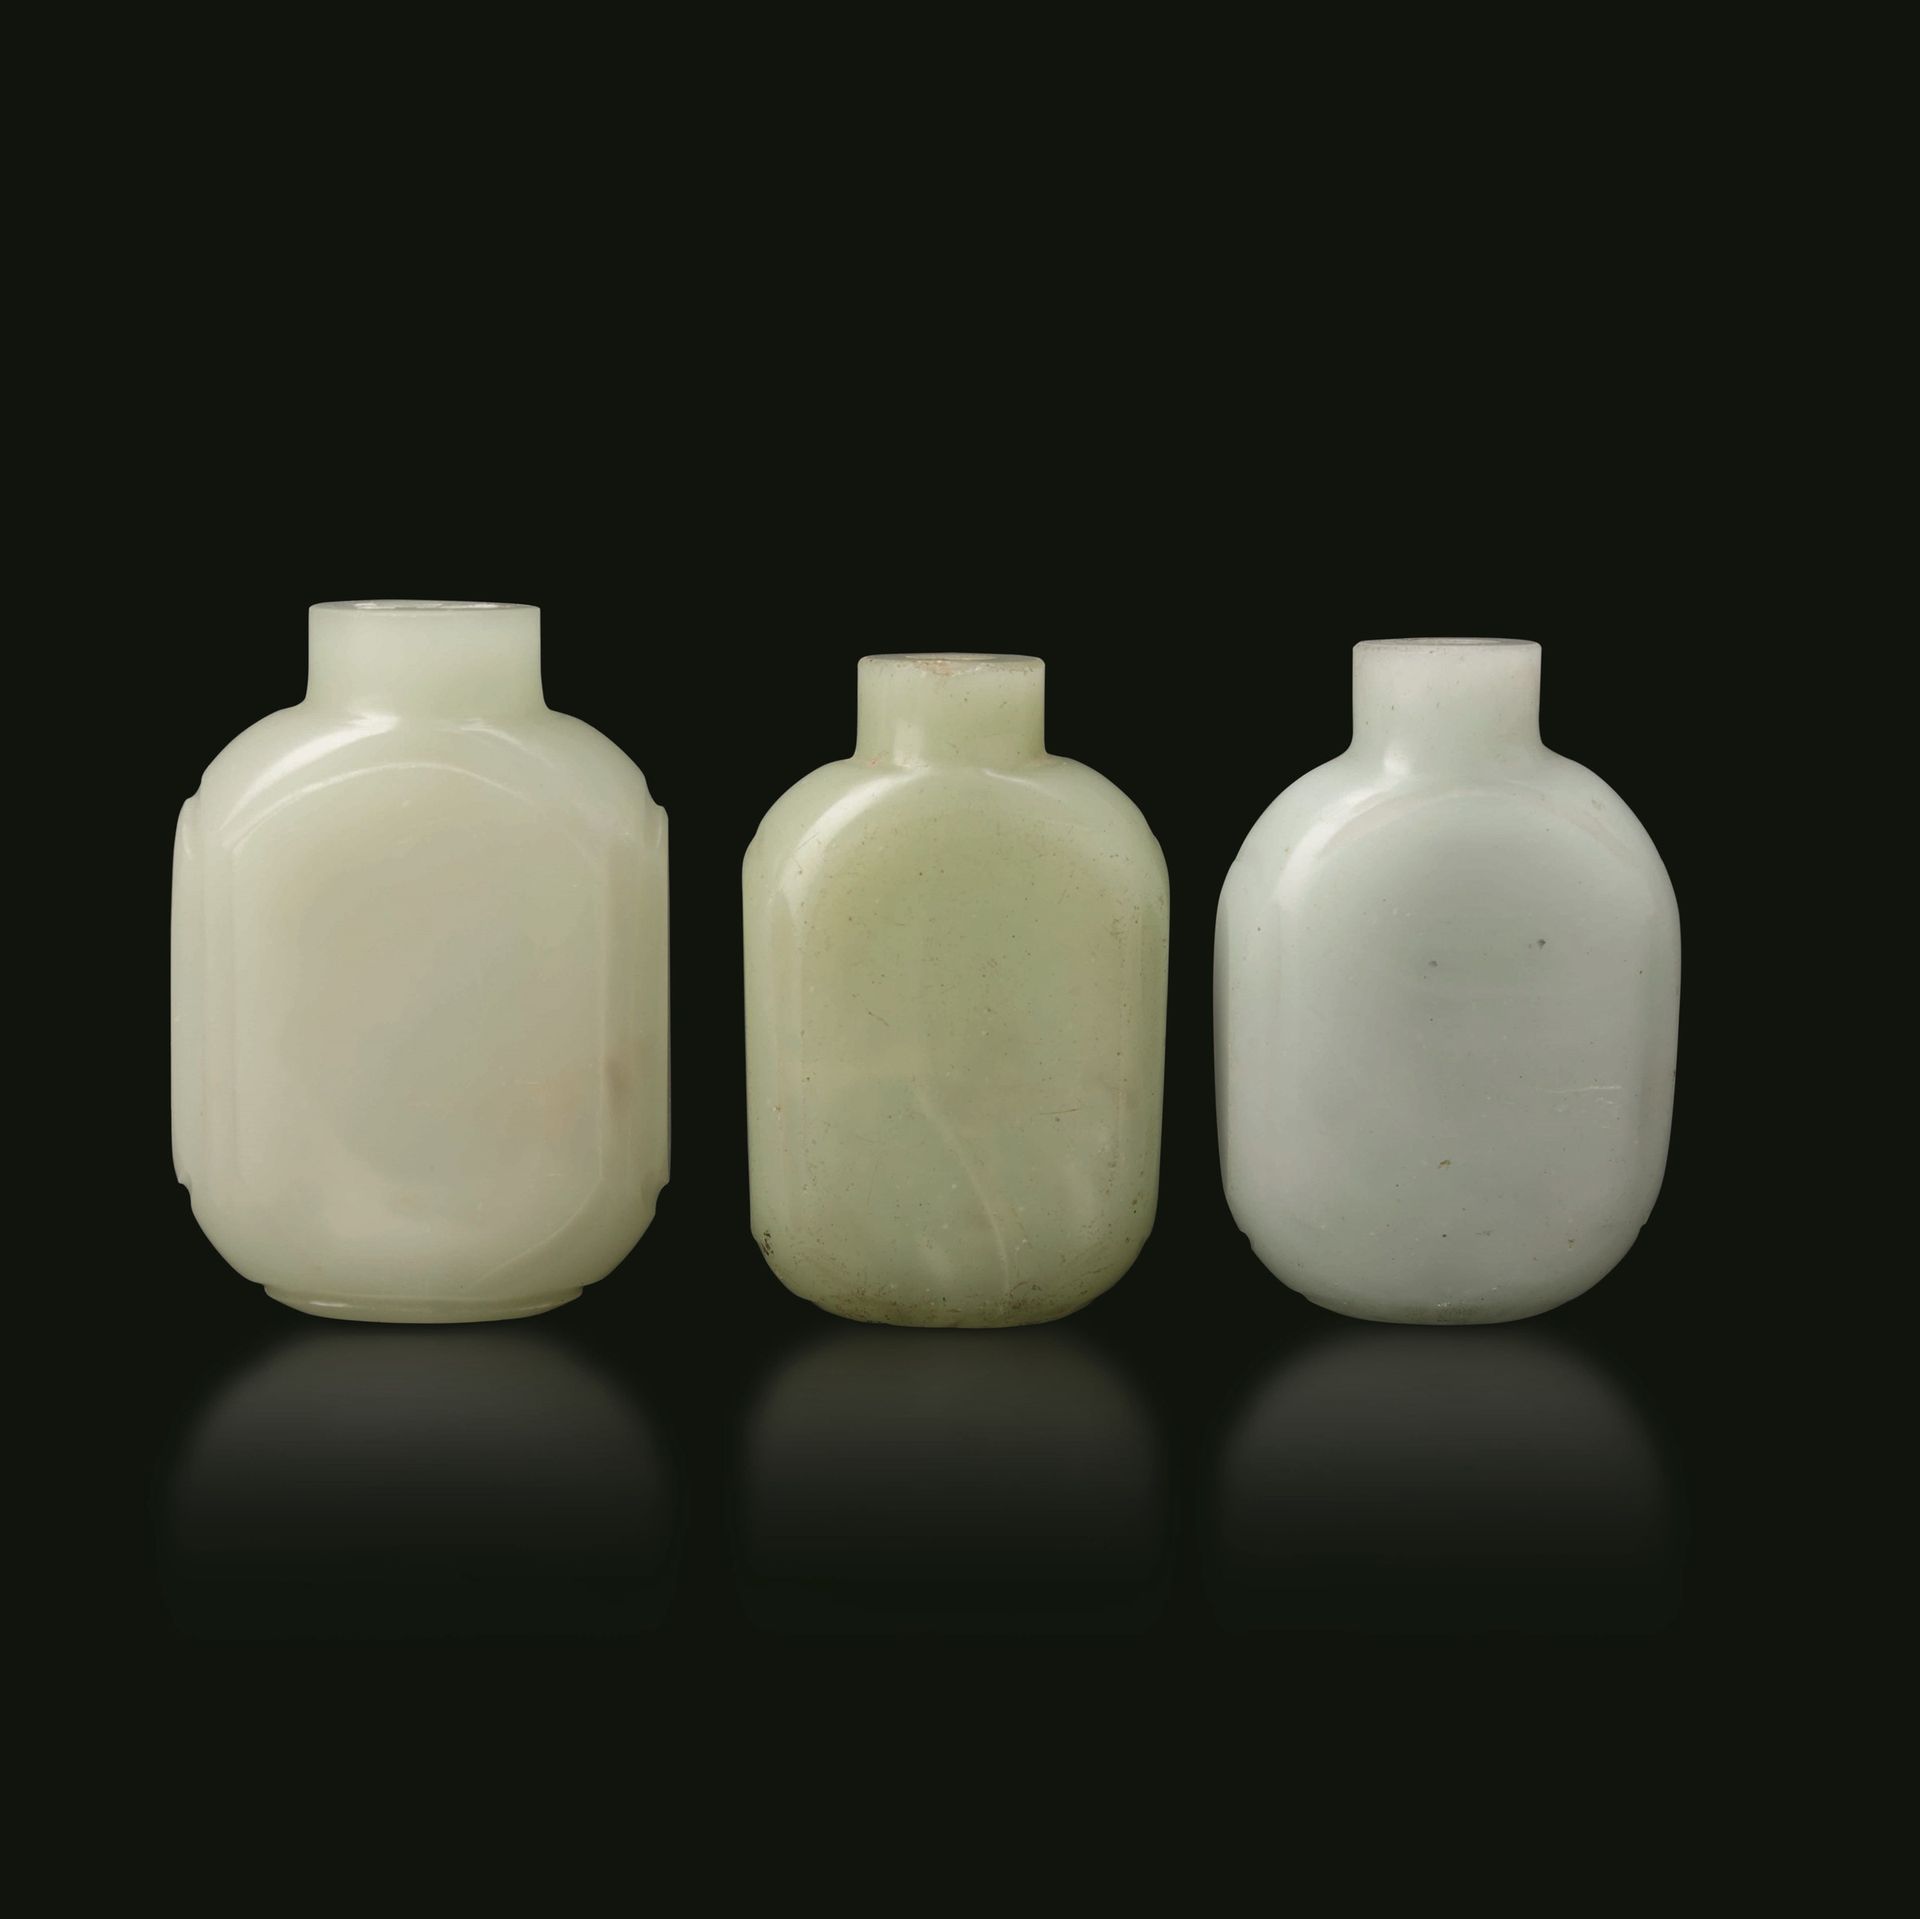 Three white jade snuff bottles, China, 1800s 清朝。青花瓷白玉。高度从6厘米到6.5厘米